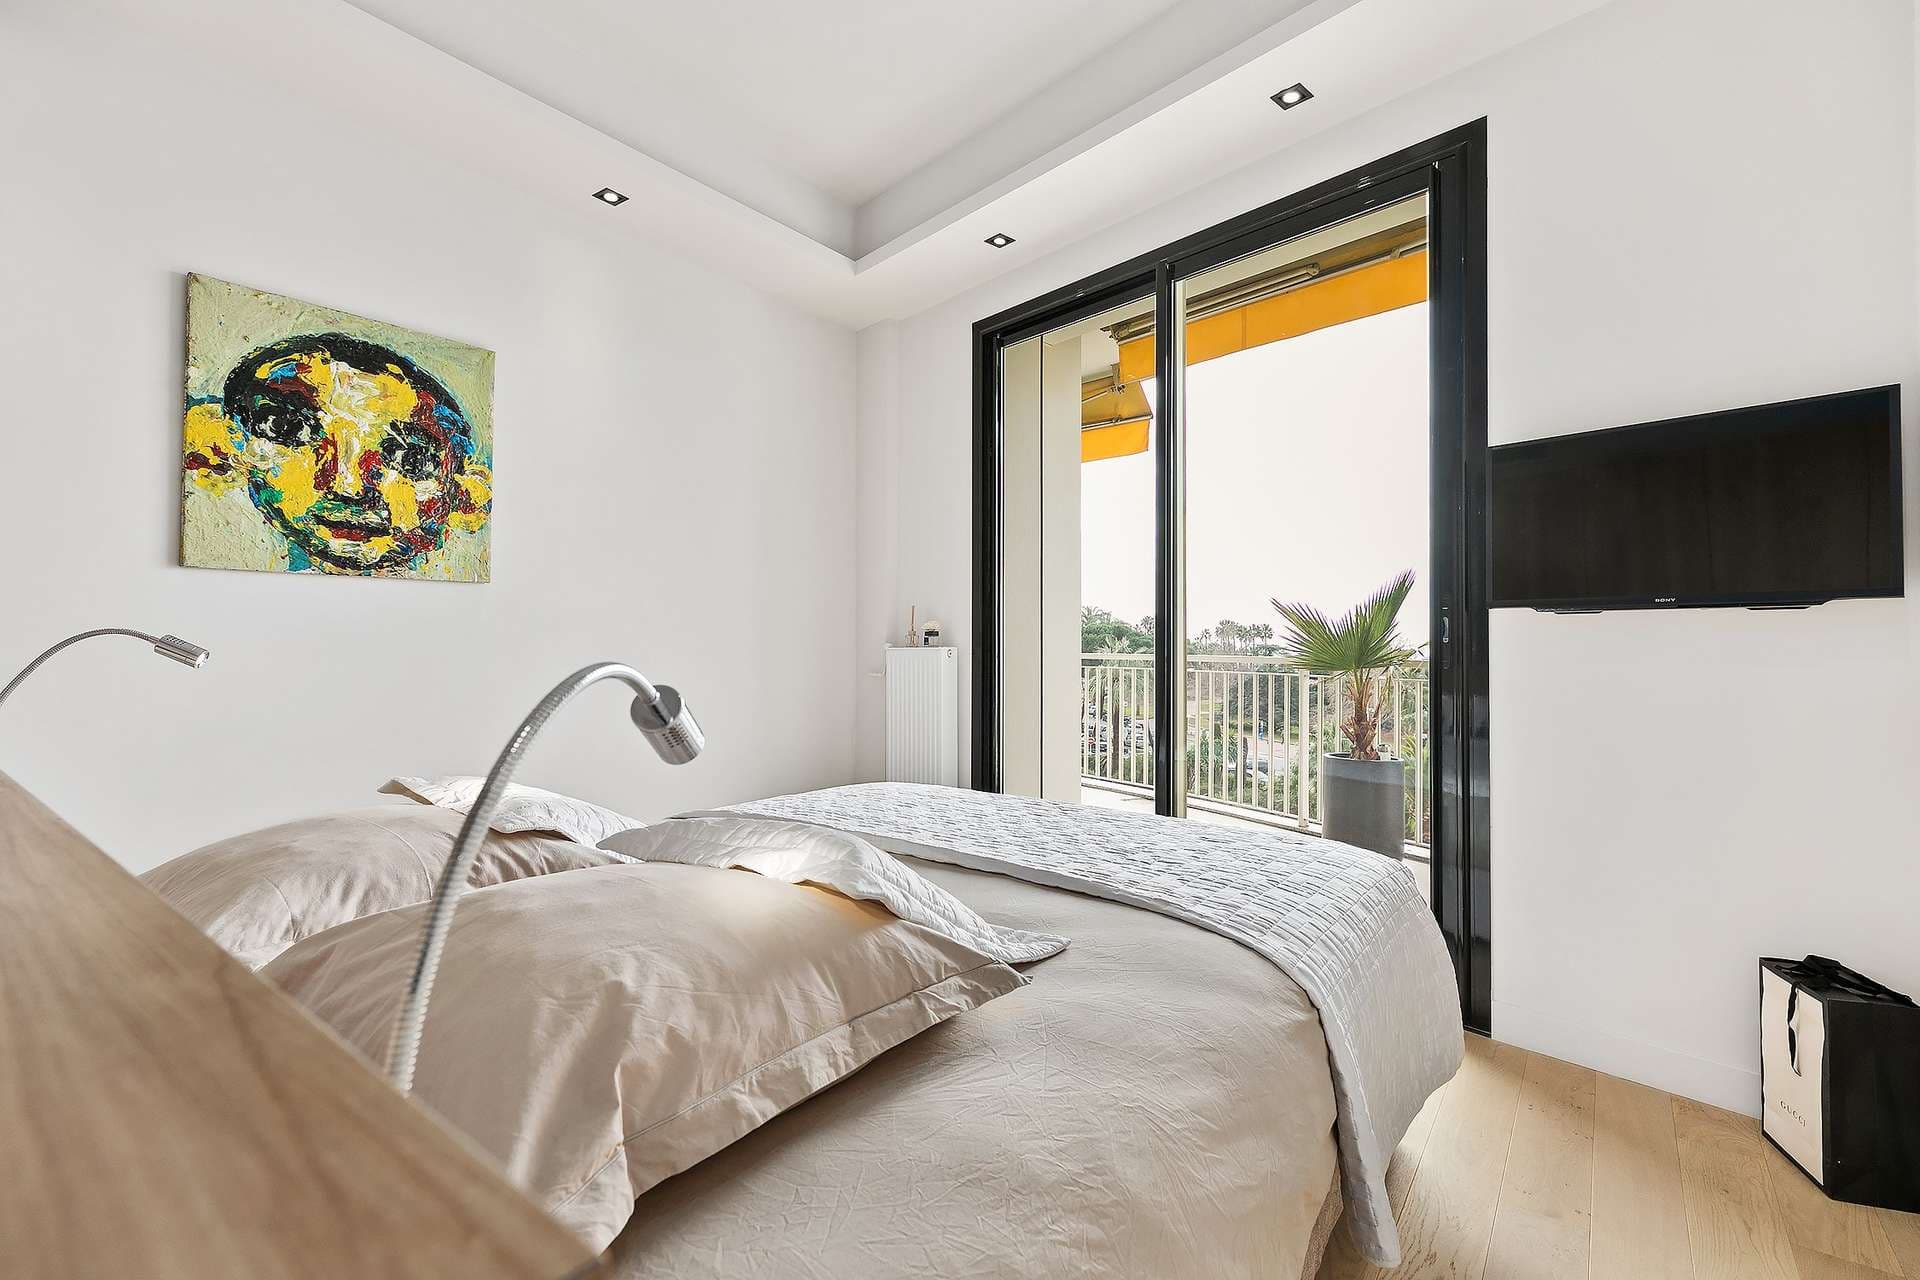 4 Bedroom Apartment For Sale Cannes Lp01016 1ea3c2ac9298b100.jpg